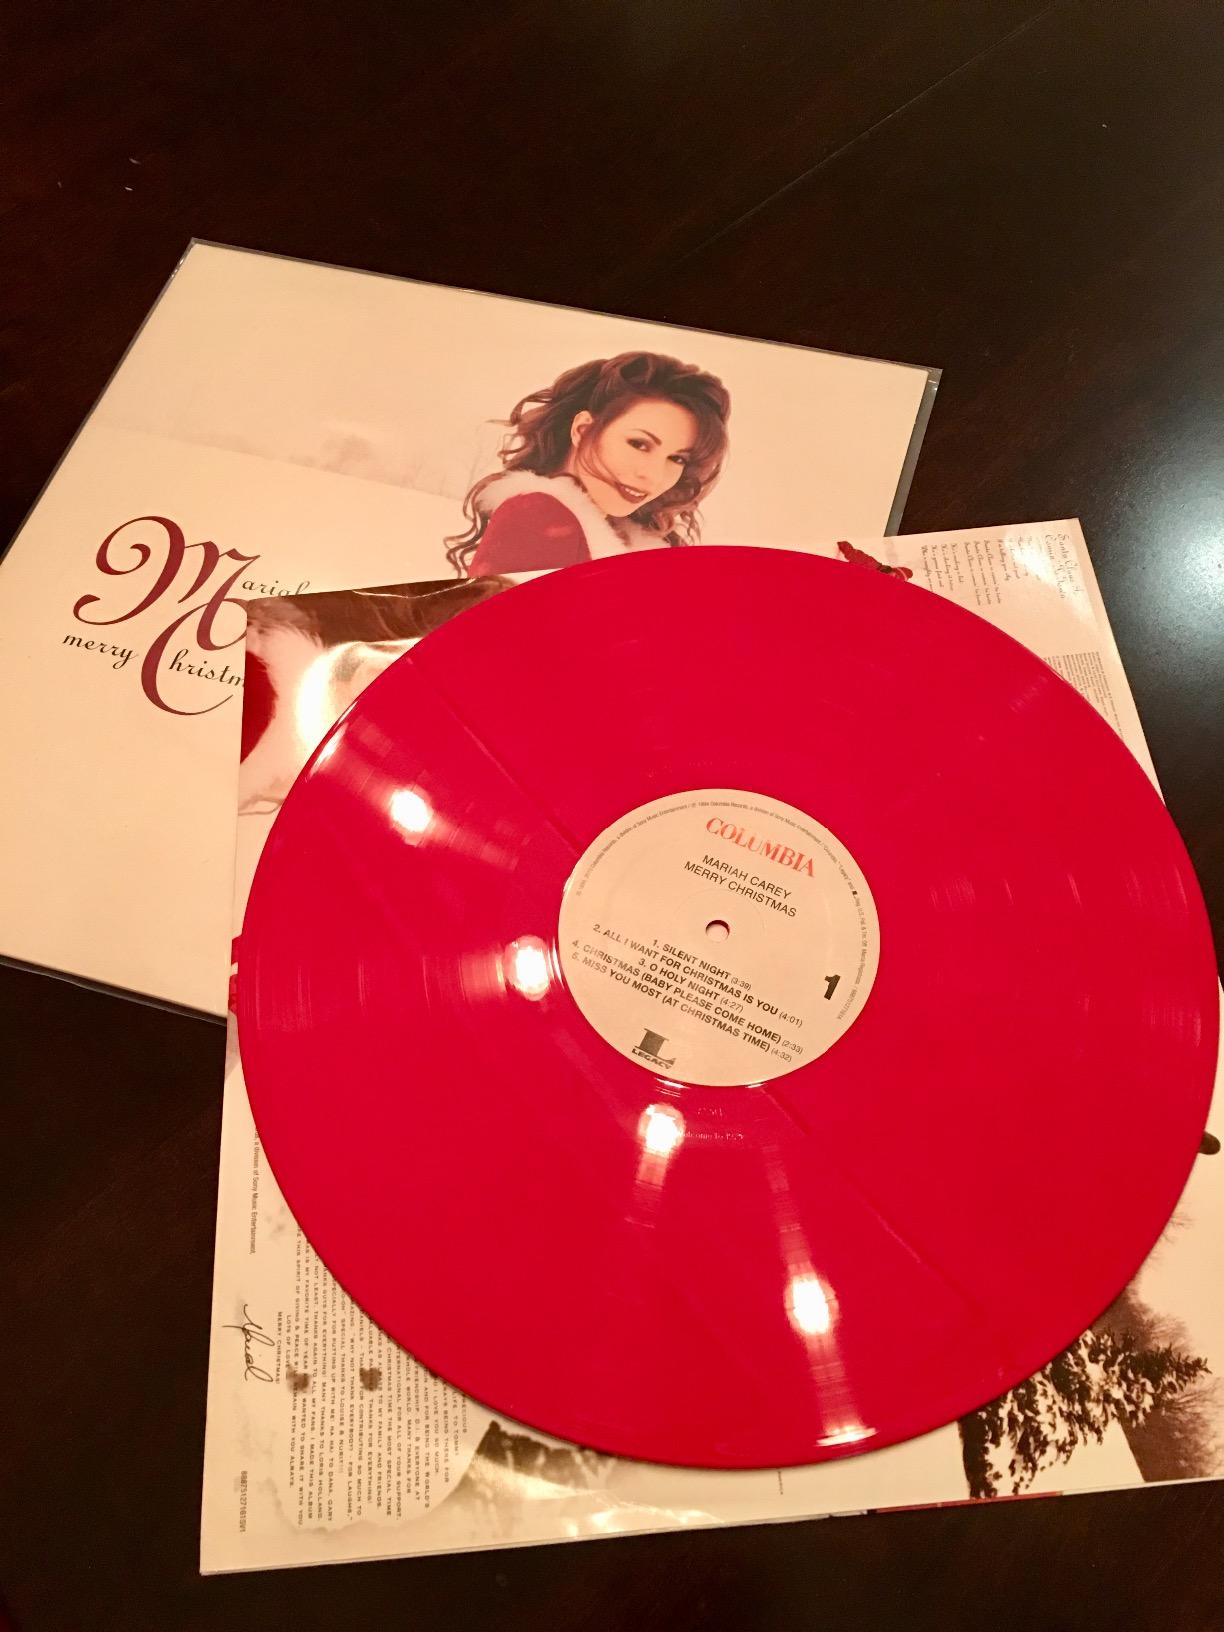 Special edition red vinyl